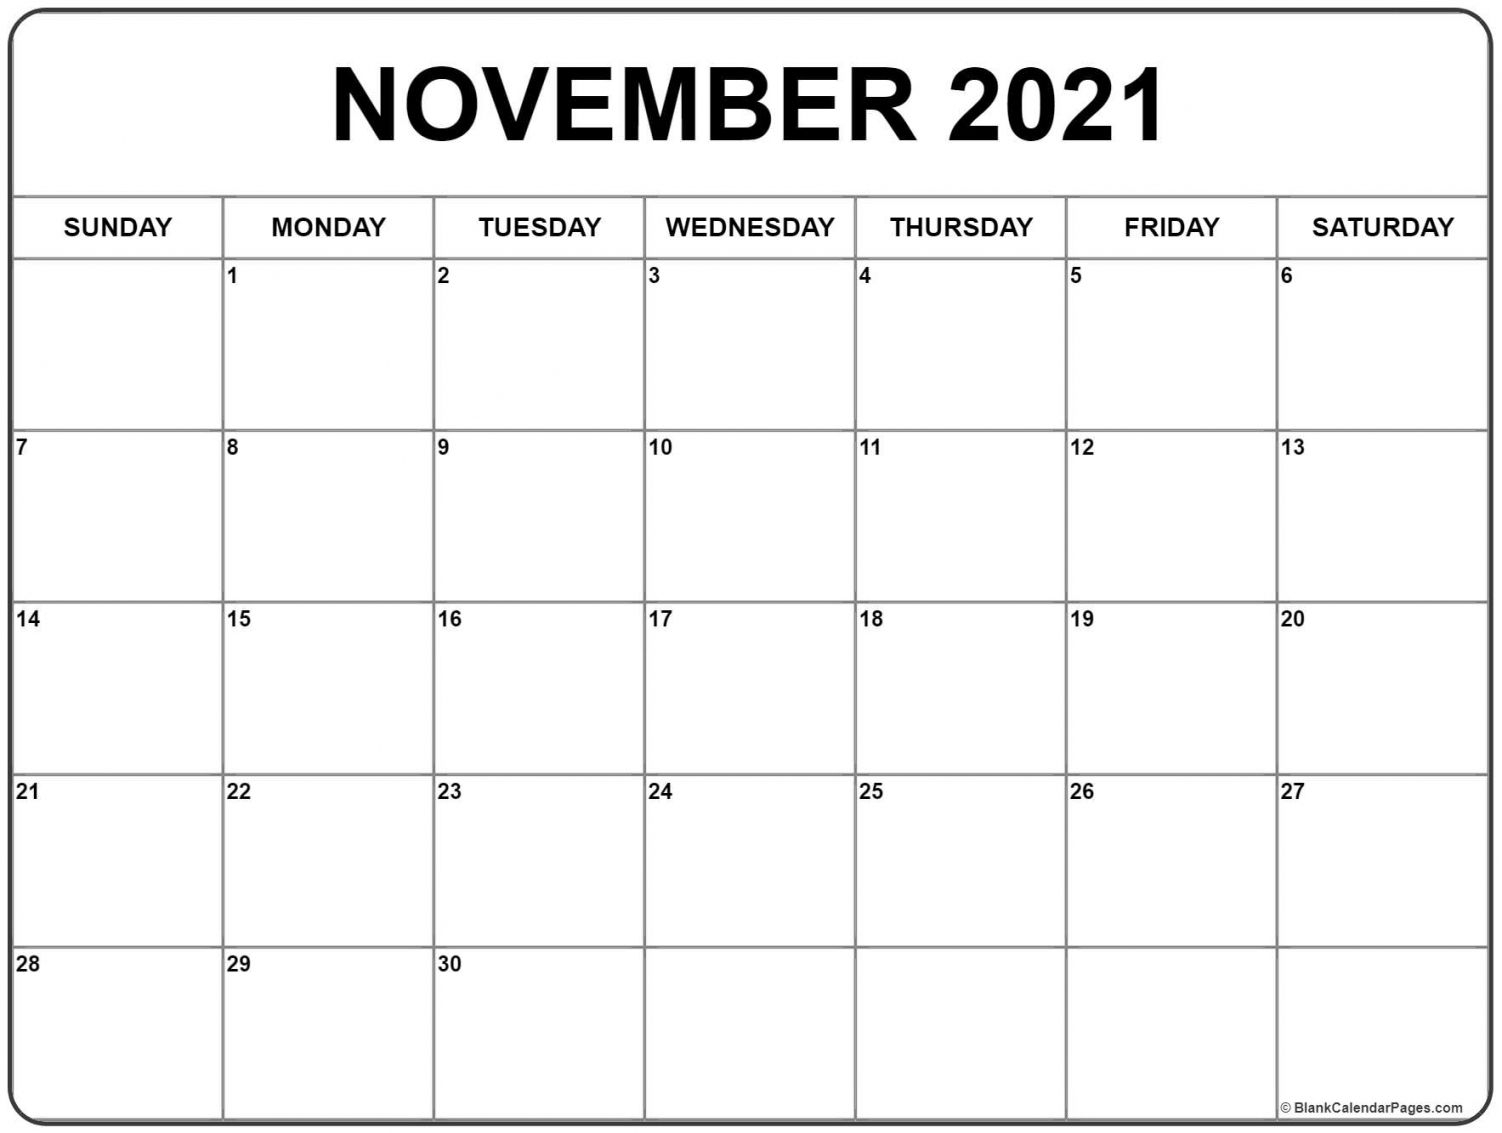 Get November Calandars 2021